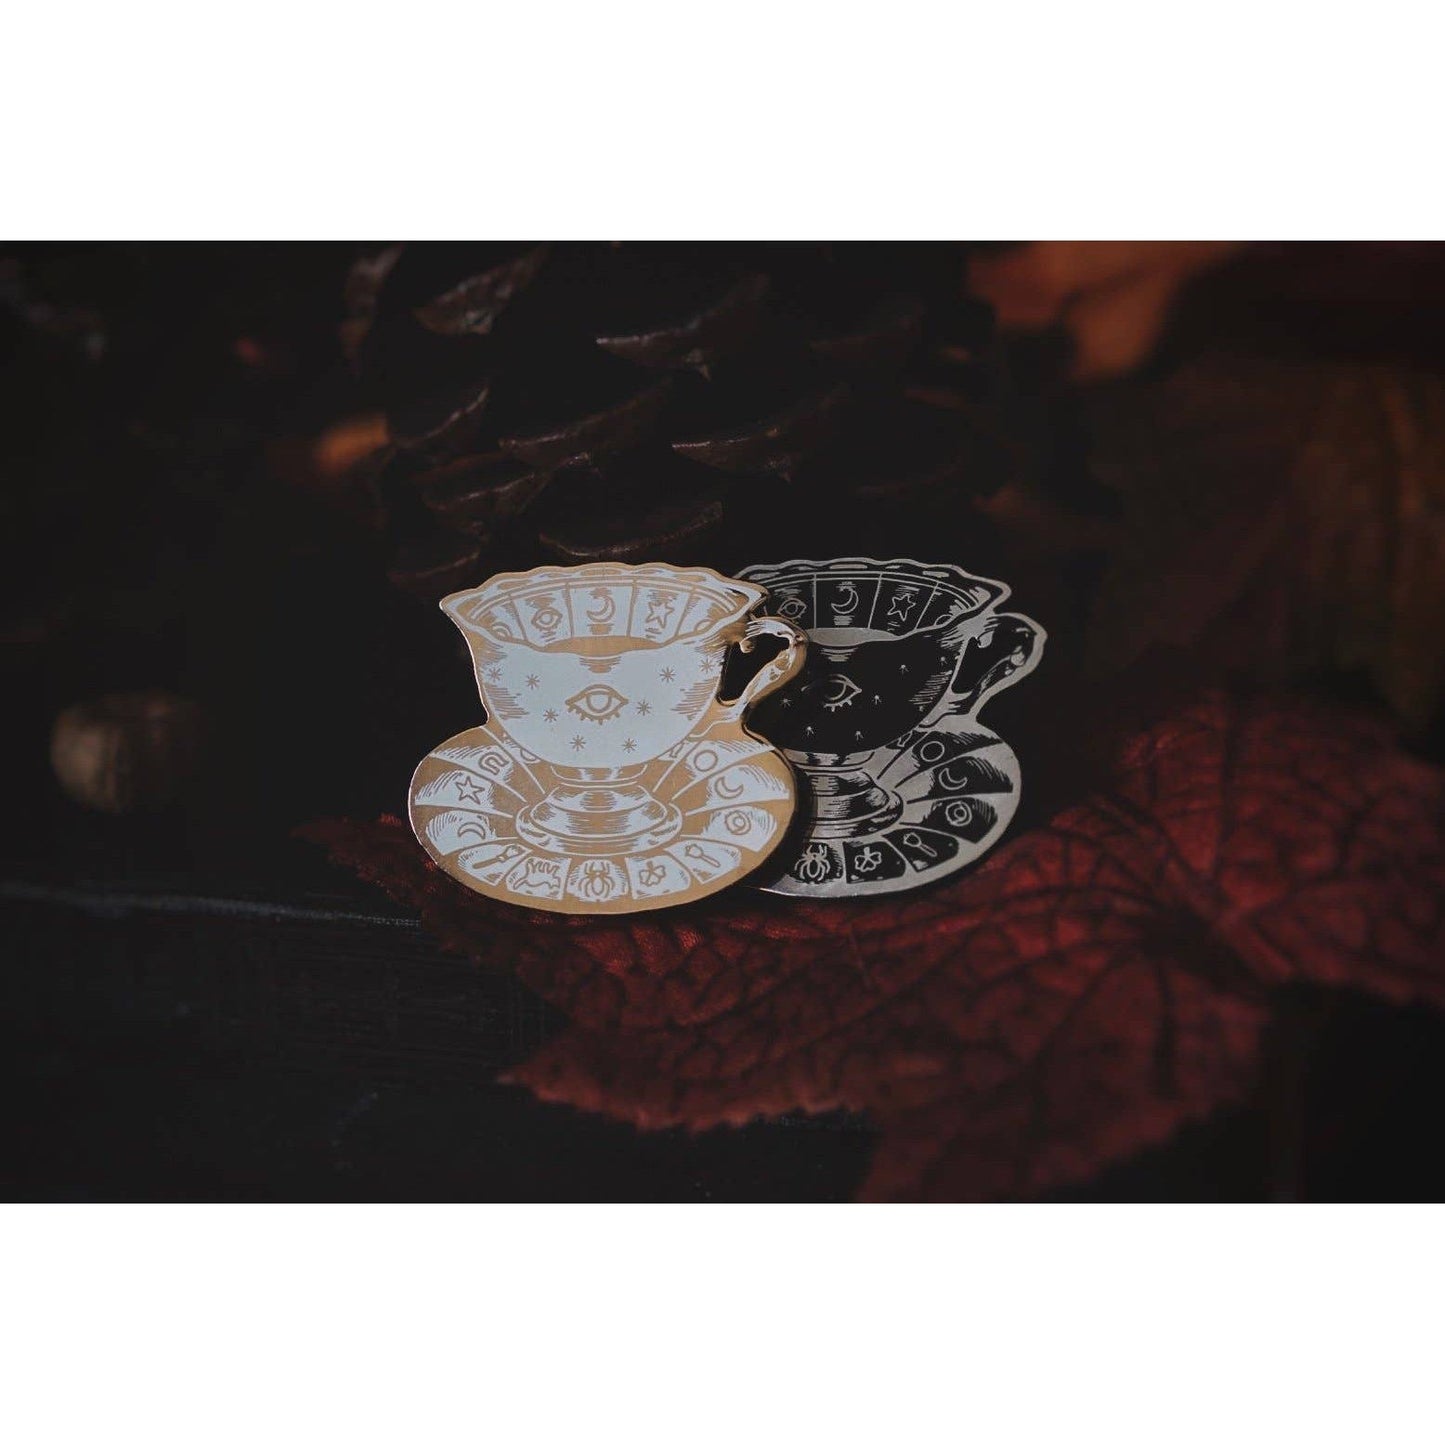 Tasseomancy Tea Leaf Reading Mystical Enamel Pin in White/Gold | Eye Symbol Brooch Lapel Pin | 1.5"